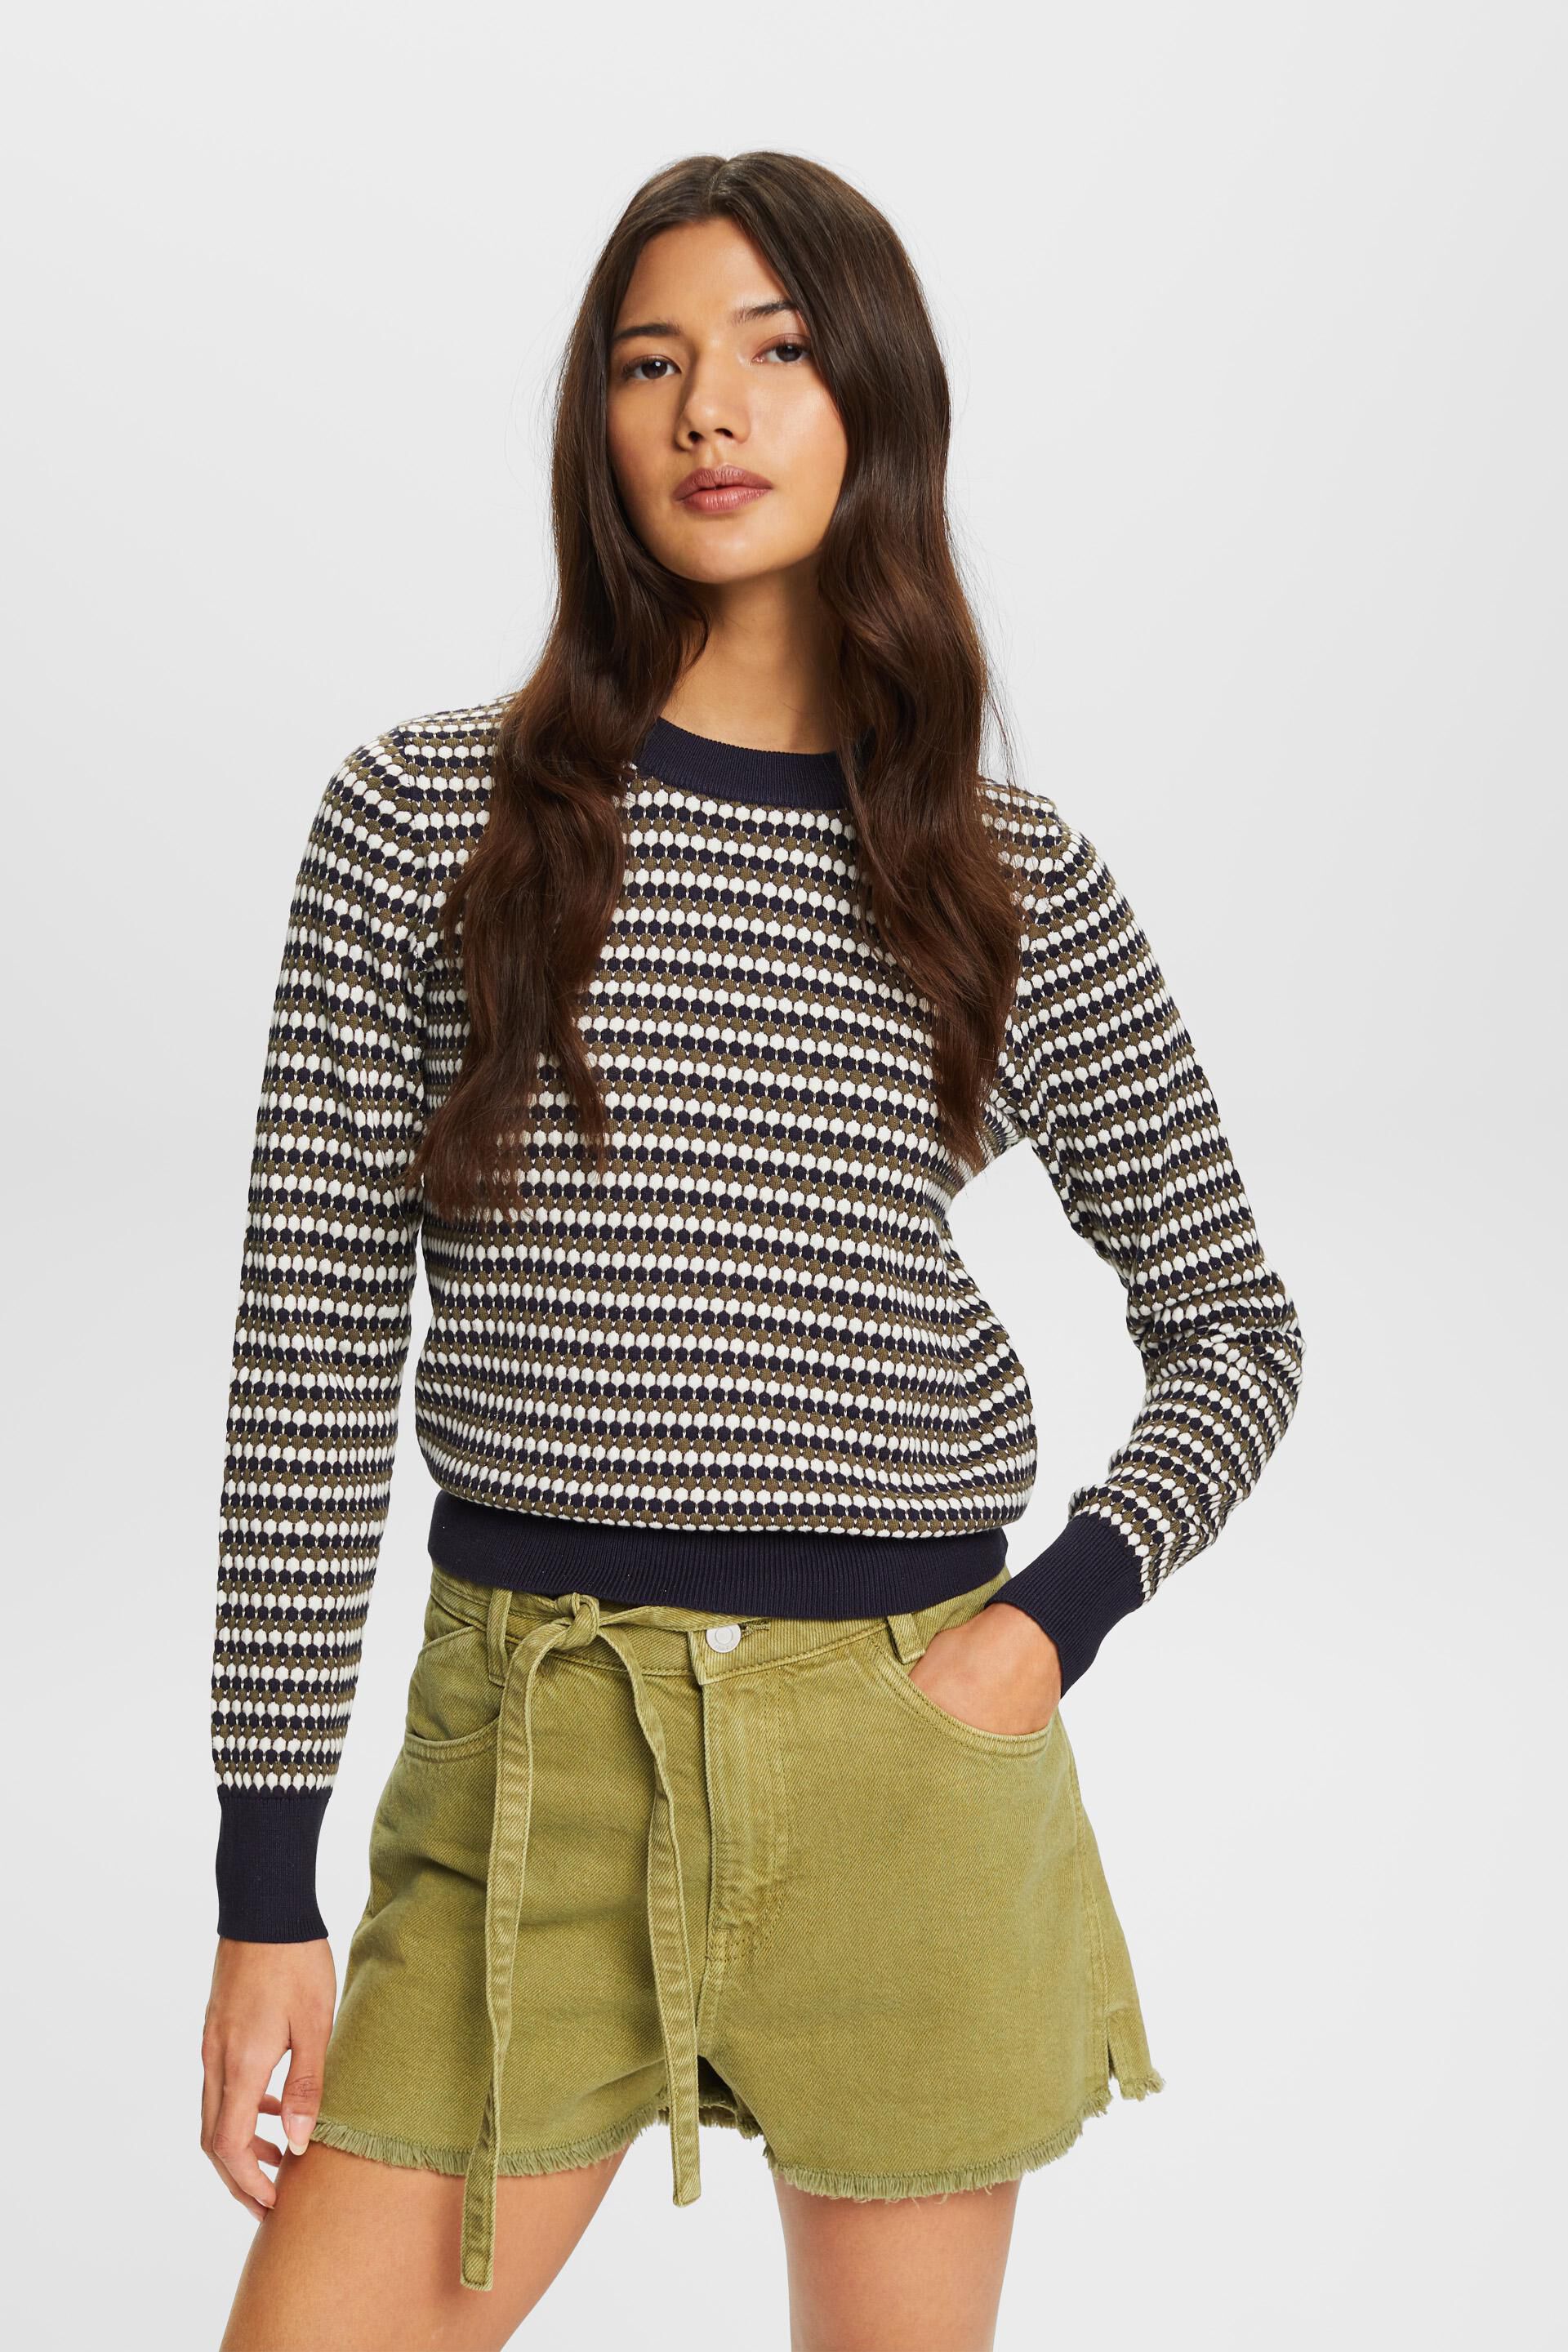 Esprit Damen Multi-coloured jumper, cotton blend